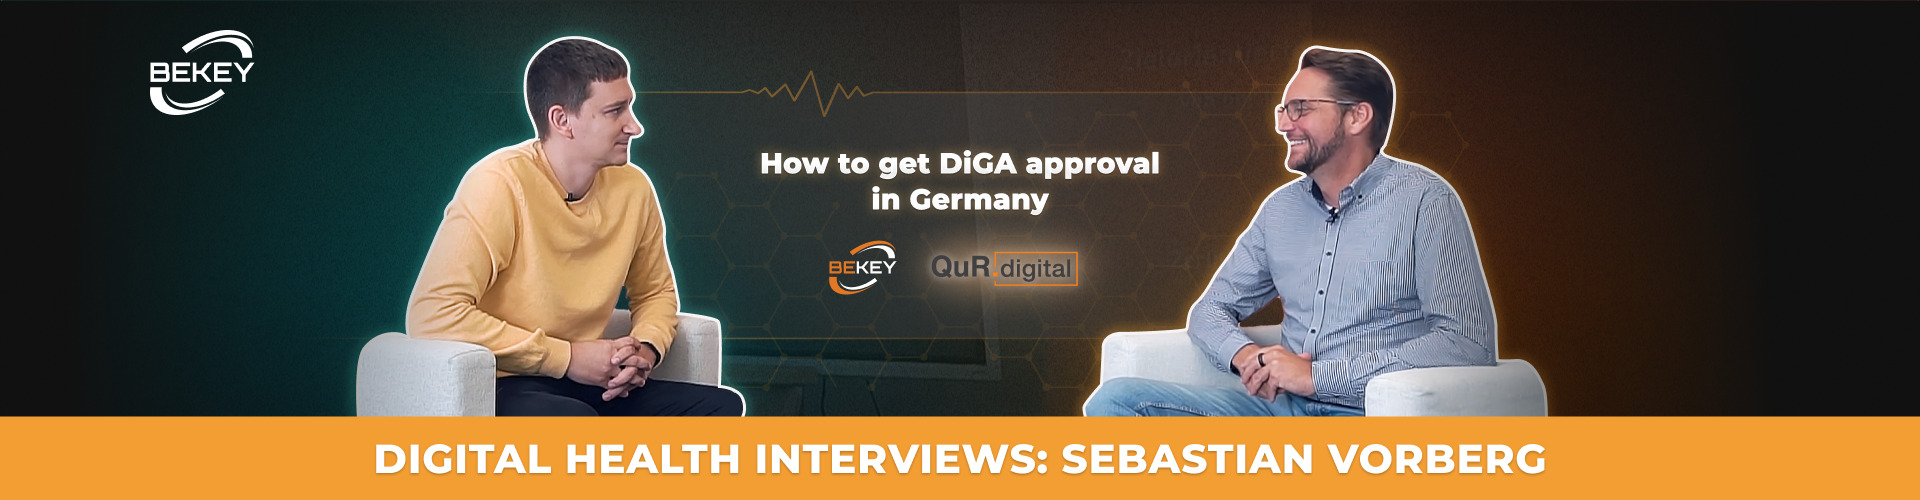 How to Get DiGA Approval in Germany. Digital Health Interviews: Sebastian Vorberg - image